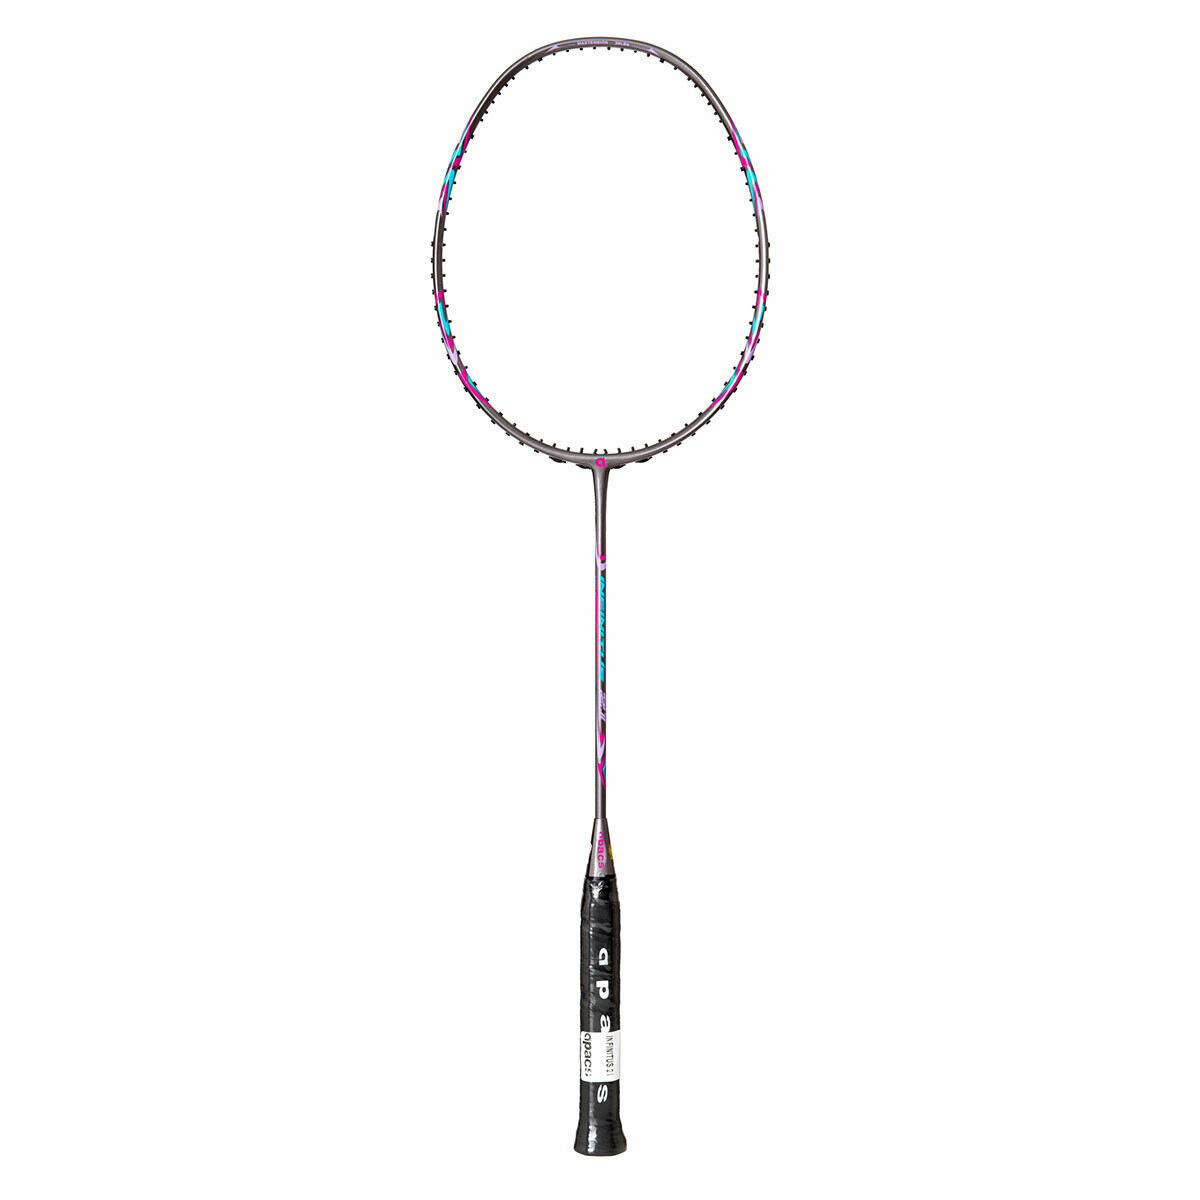 Apacs Infinitus 21 Badminton Racquet- with Full Cover